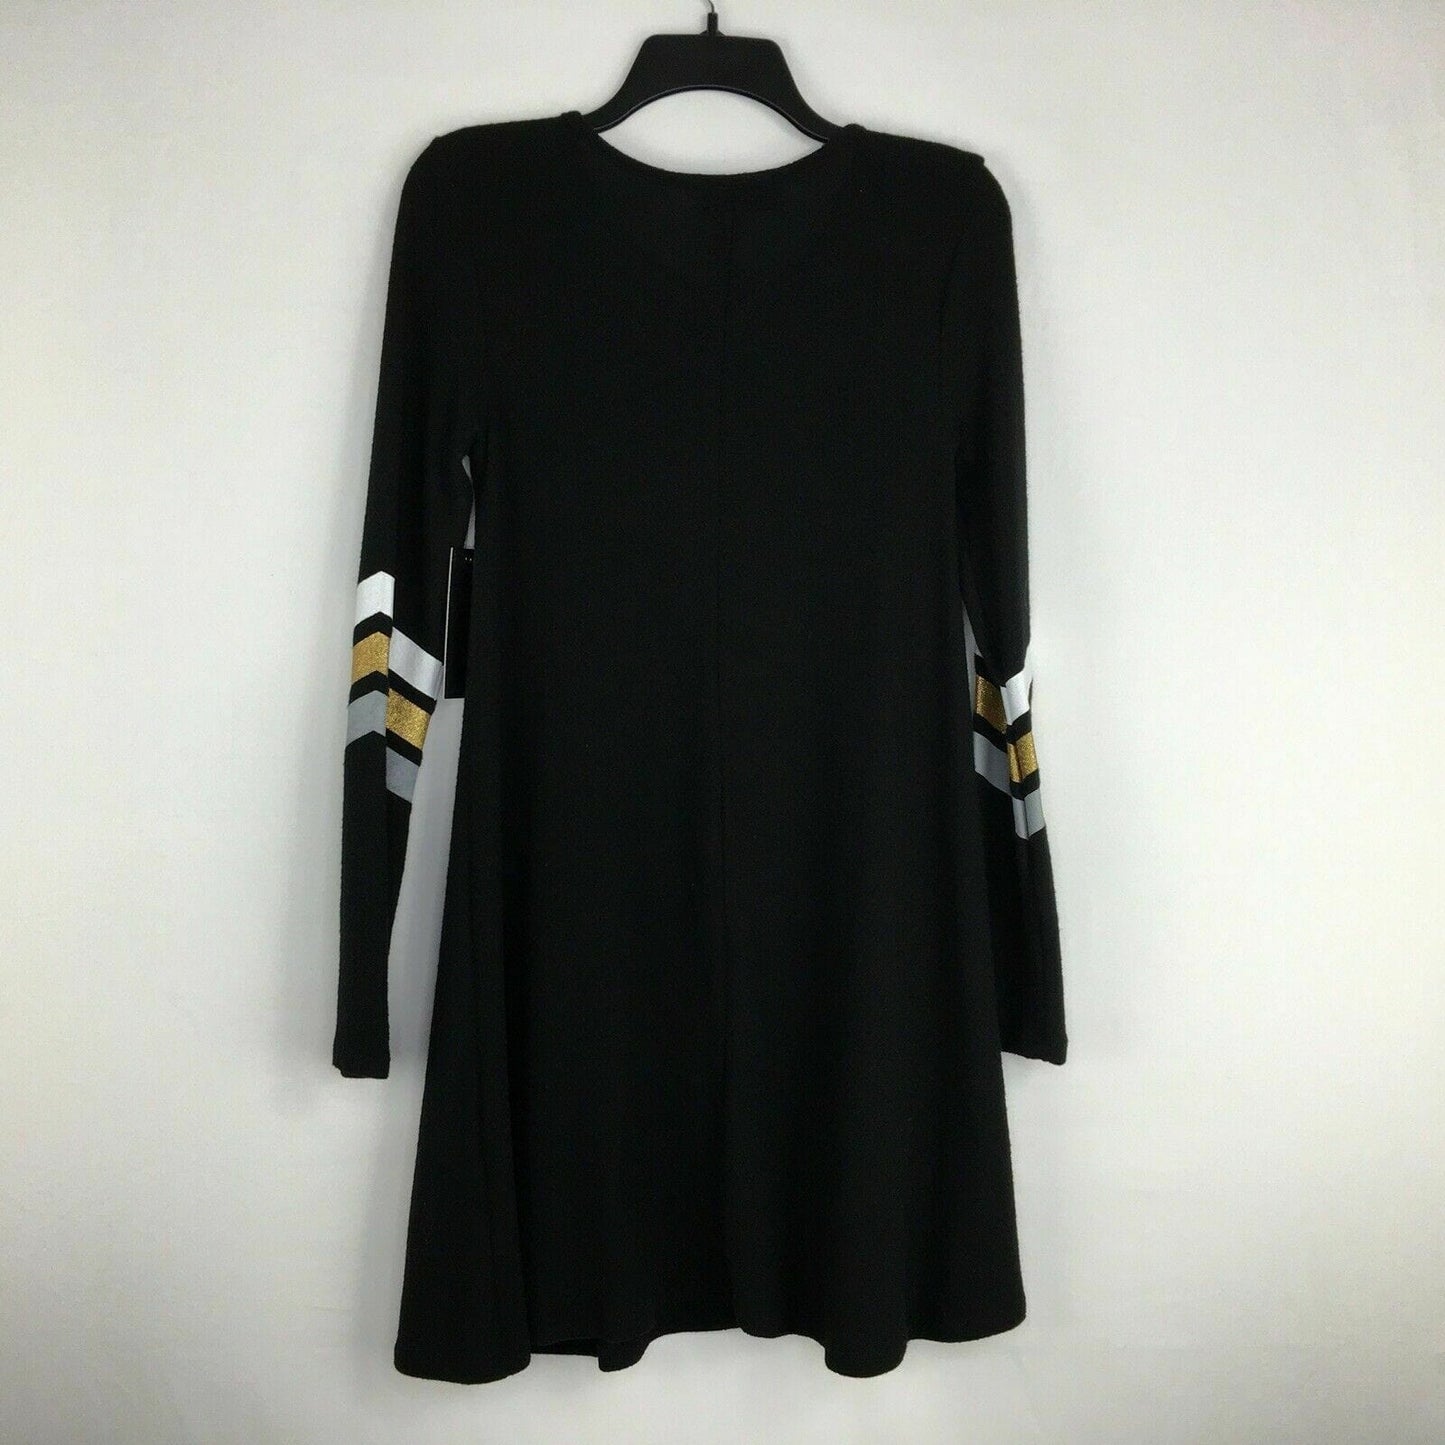 Btween Womens Juniors Size Small Black Sweater Dress Glitter “Love” & Stripes